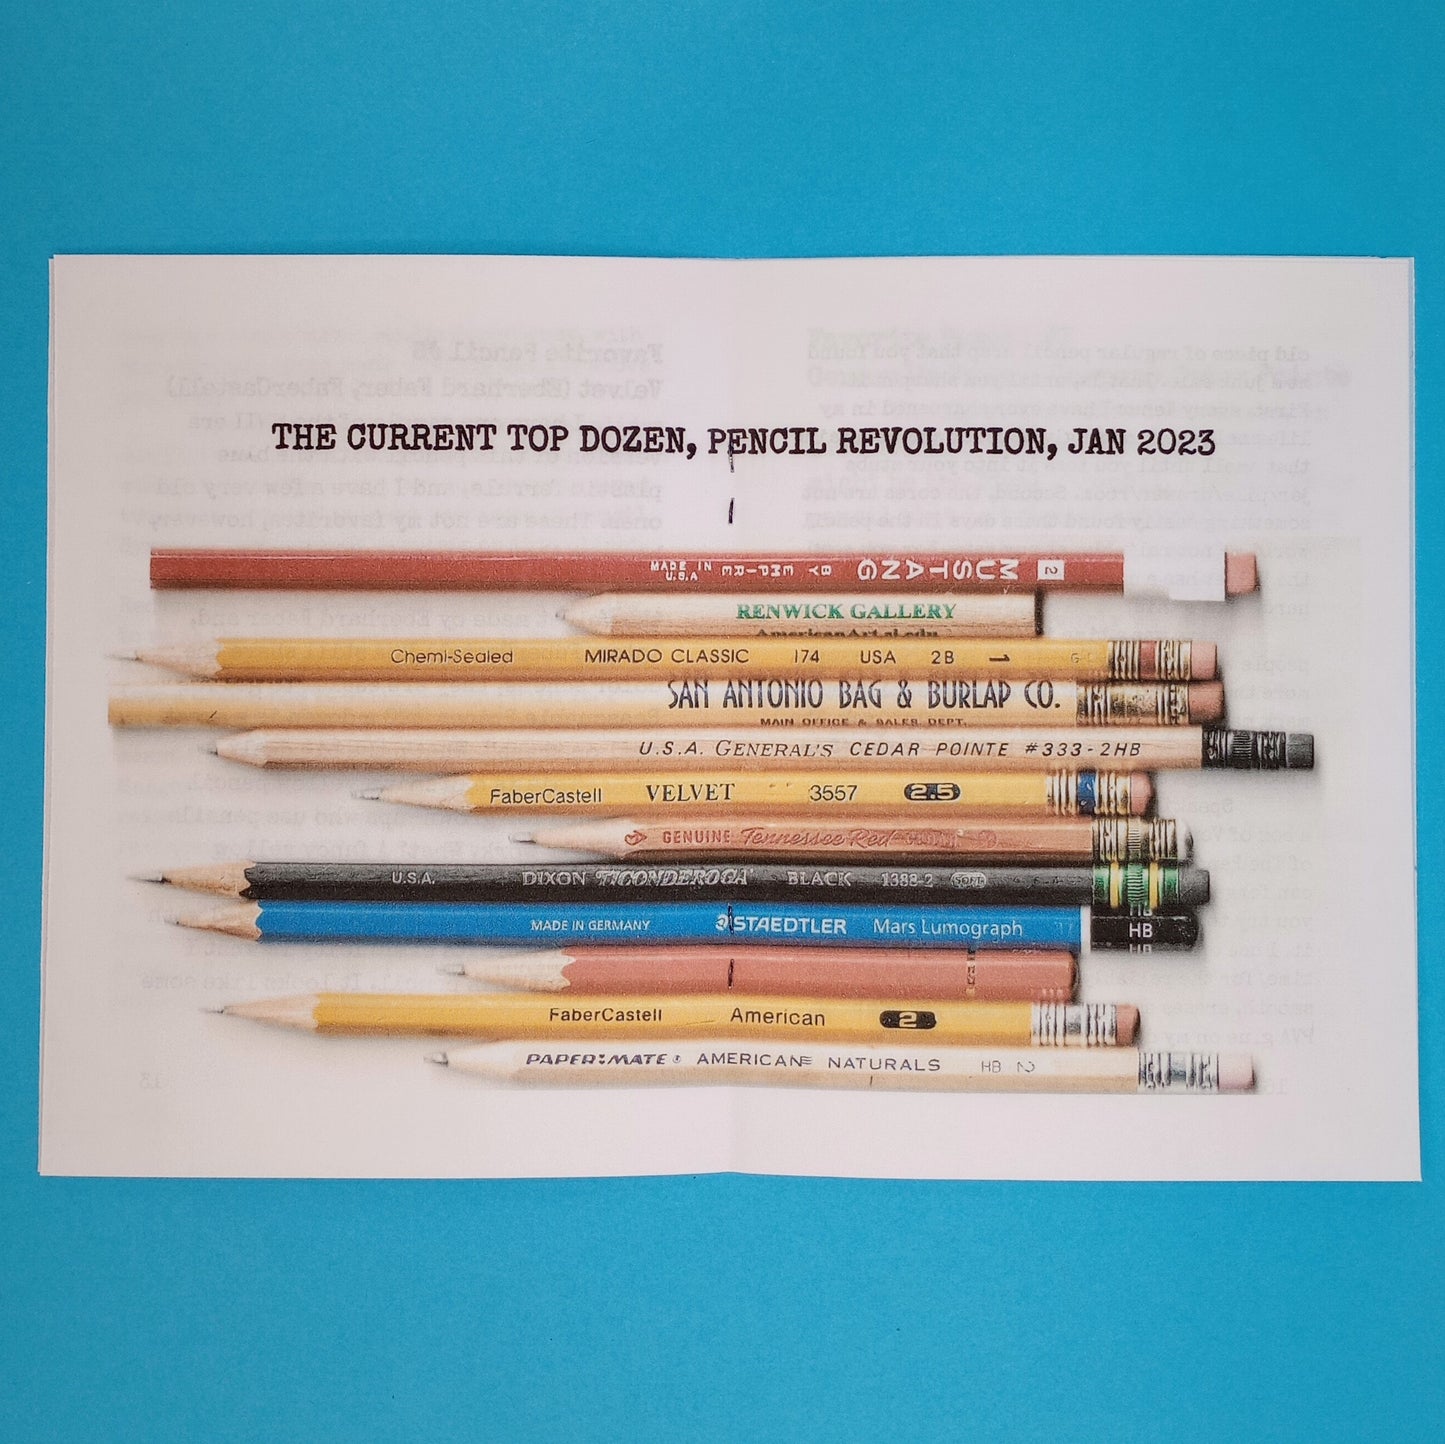 Pencil Revolution #36: The Top Dozen